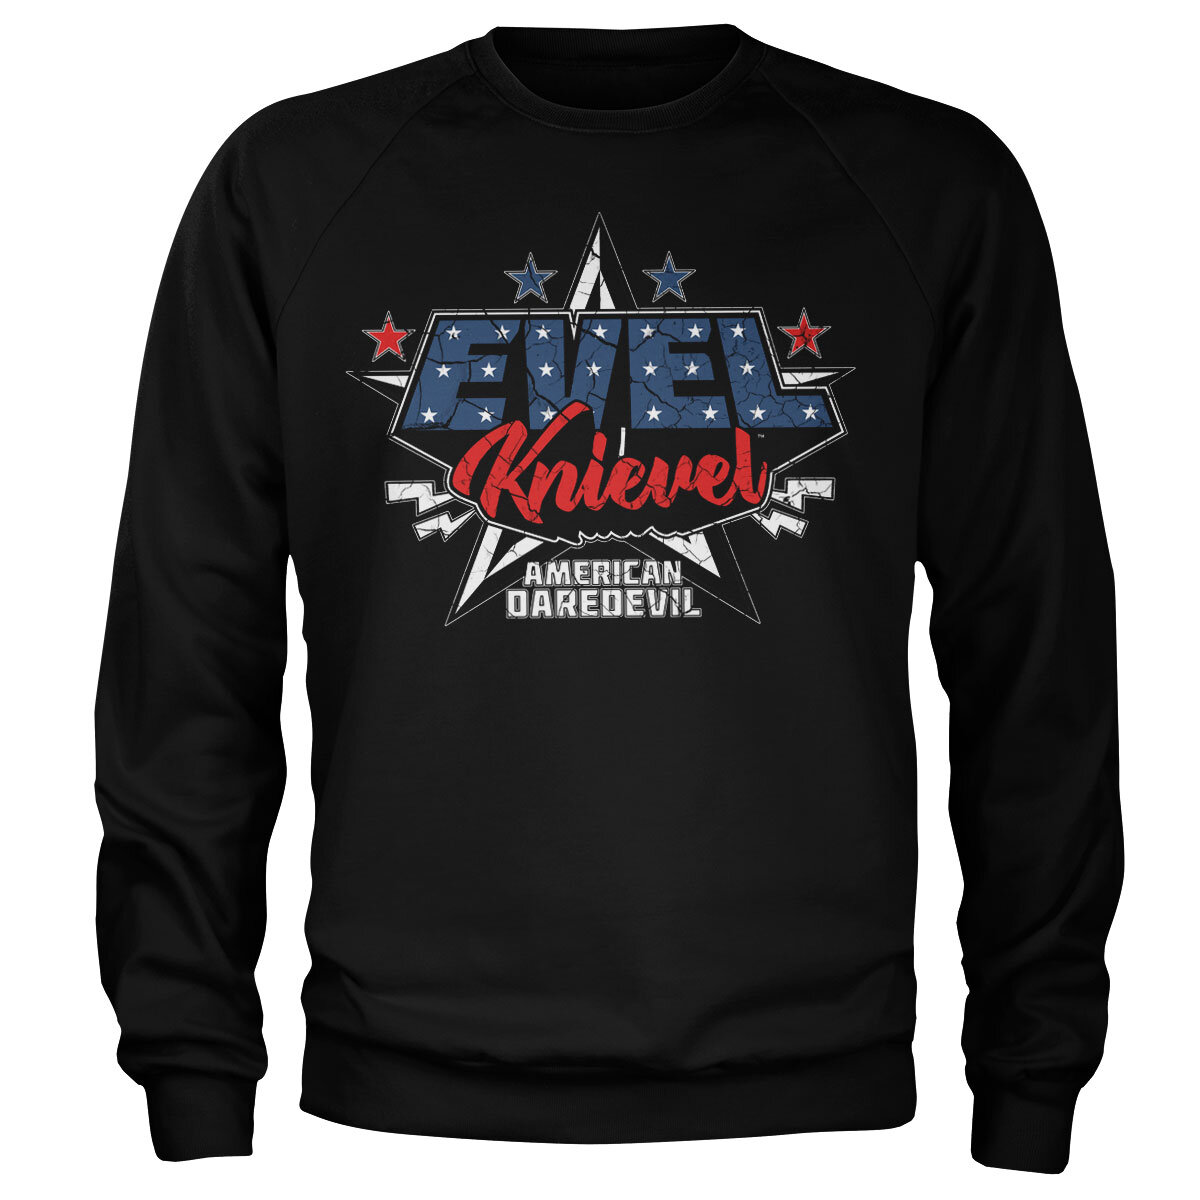 Evel Knievel - American Daredevil Sweatshirt